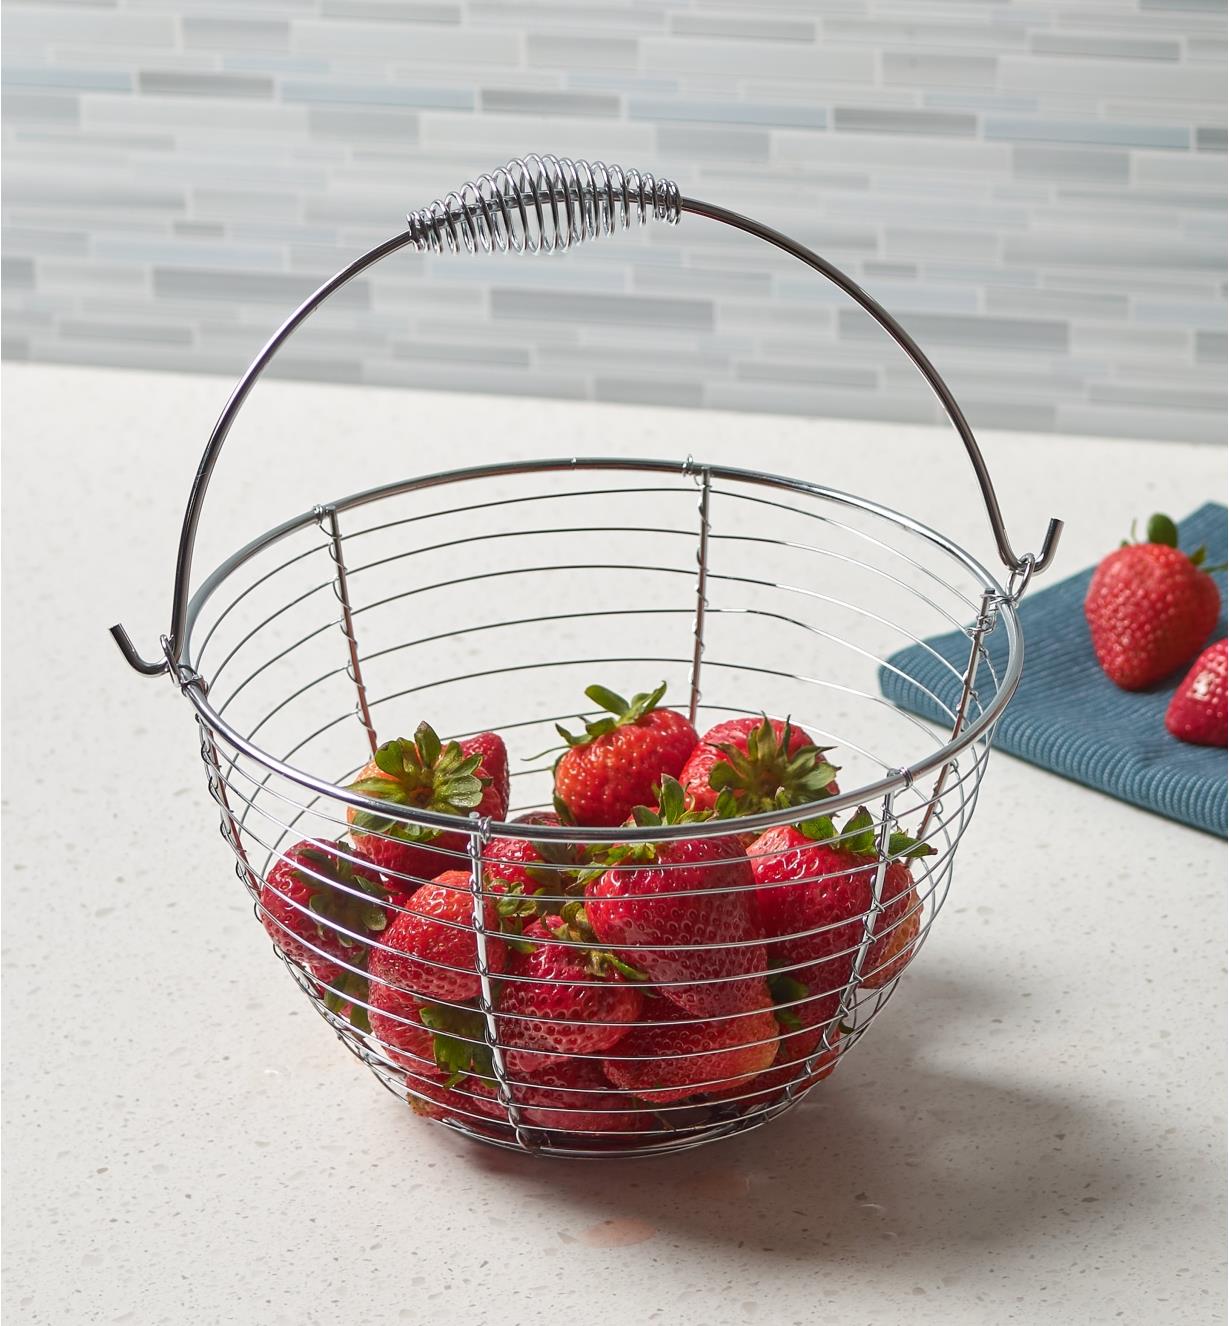 Small gardener’s wash basket containing strawberries 